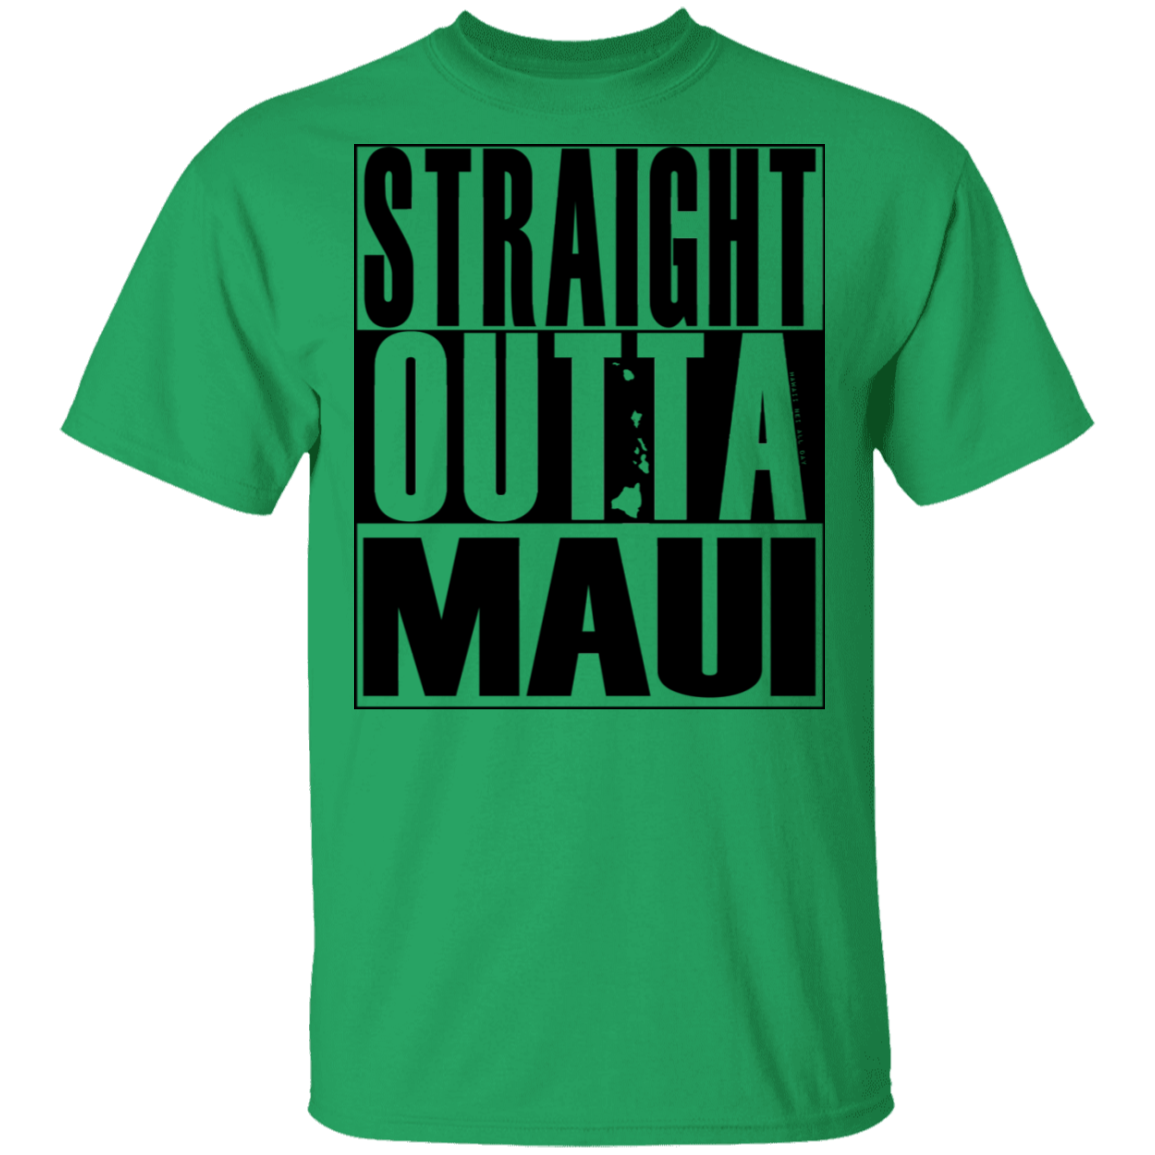 Straight Outta Maui(black ink) T-Shirt